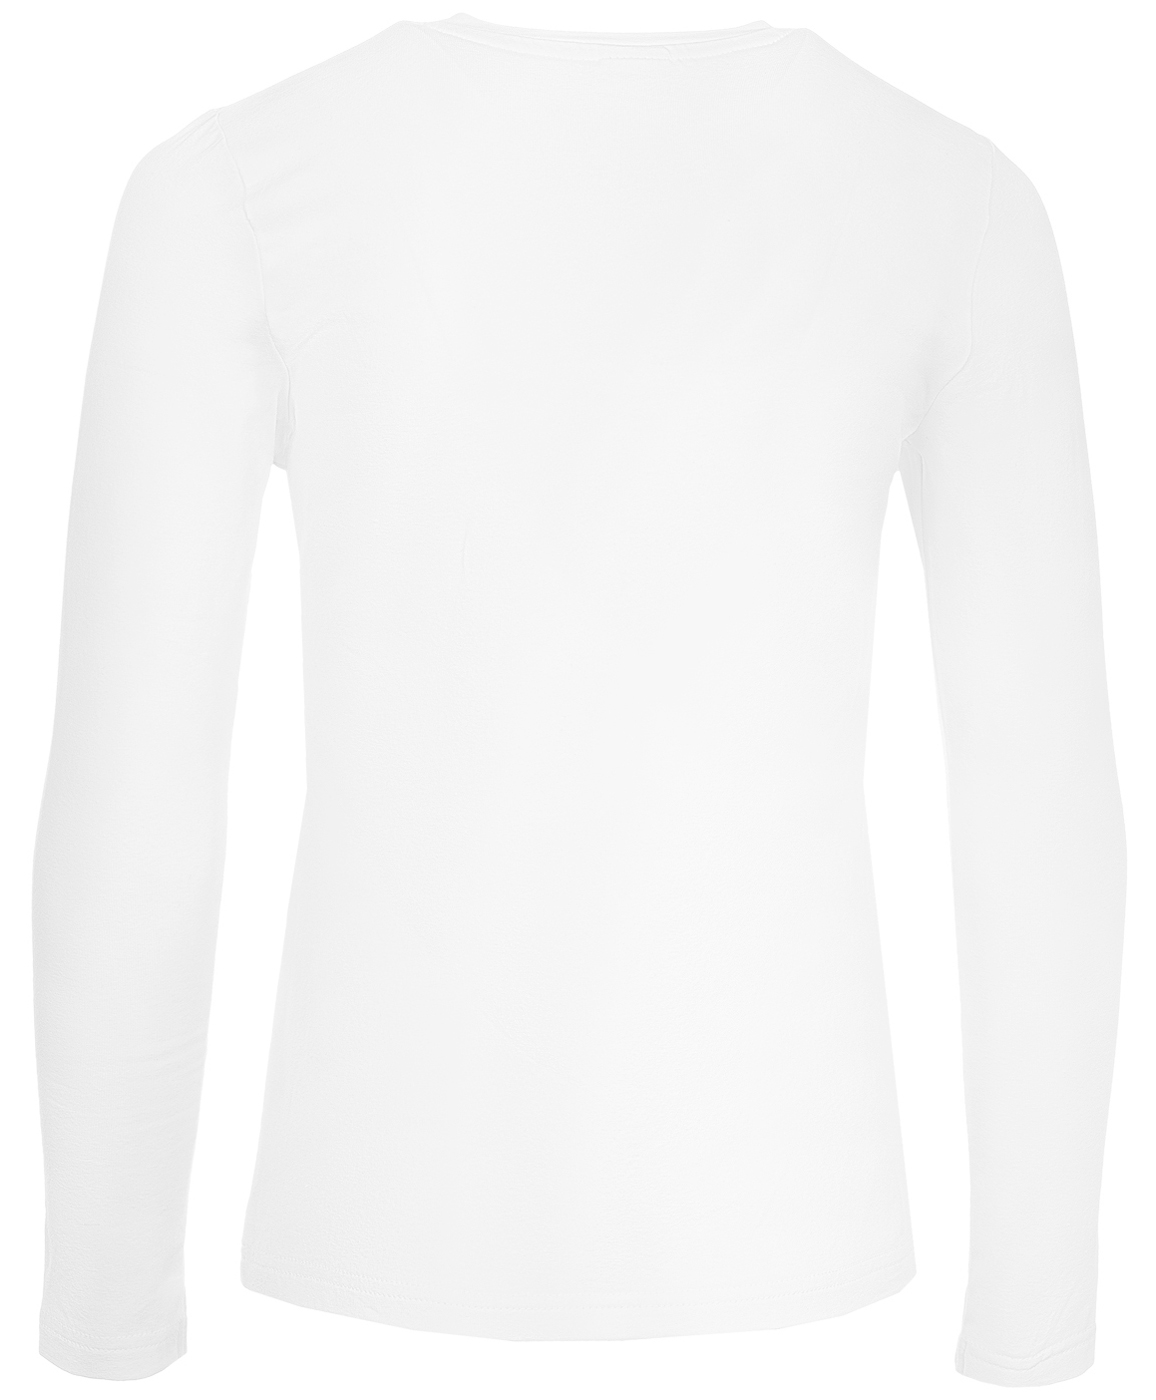 Белая футболка с длинным рукавом Button Blue 219BBGS14010200, размер 170, цвет белый - фото 3